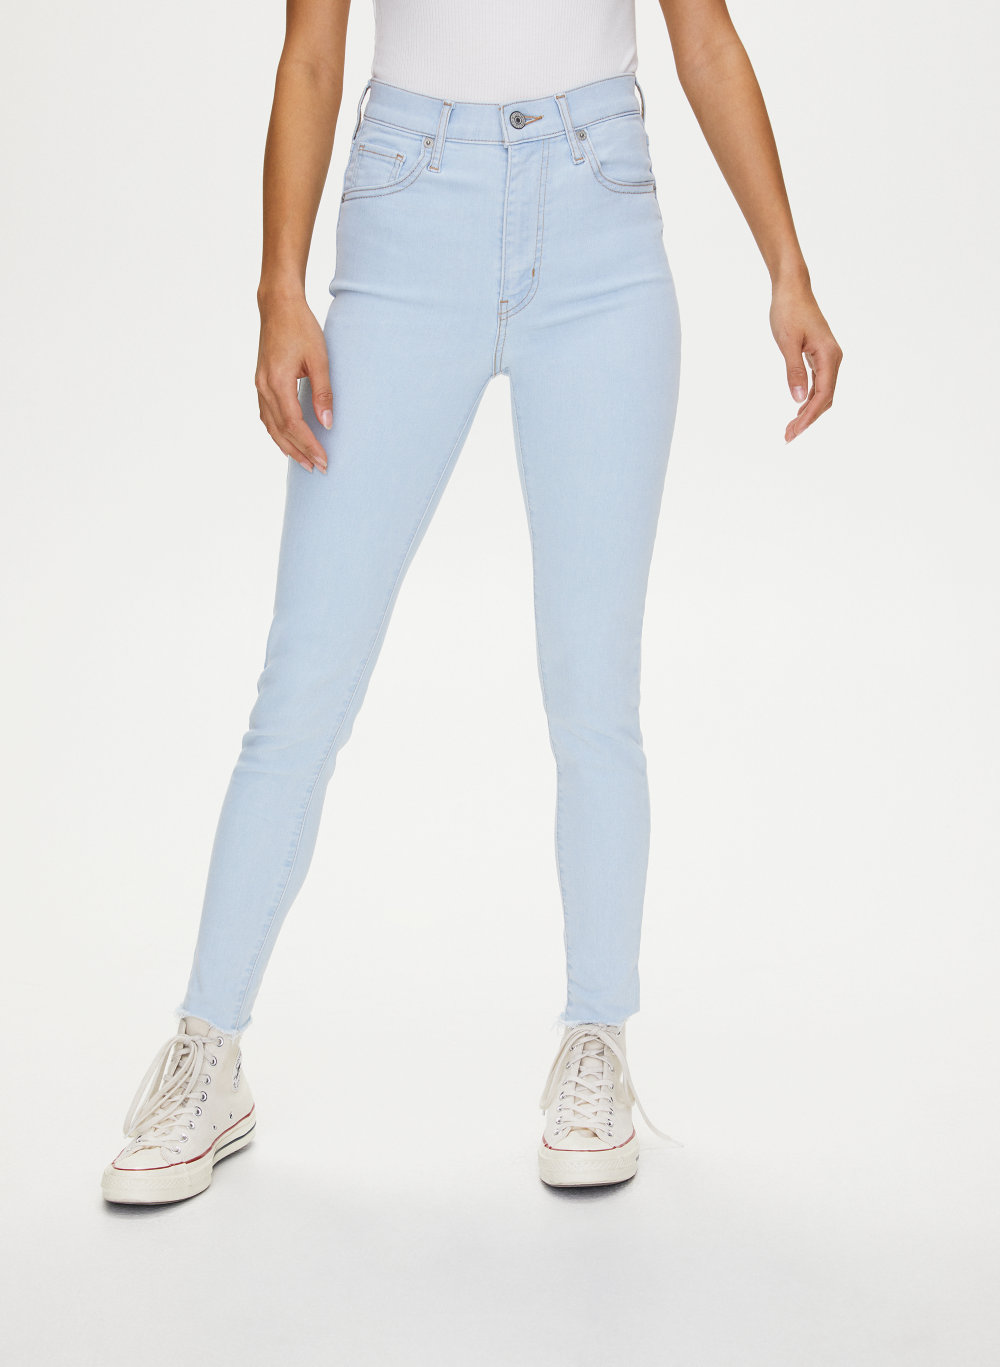 levi's mile high super skinny jeans canada